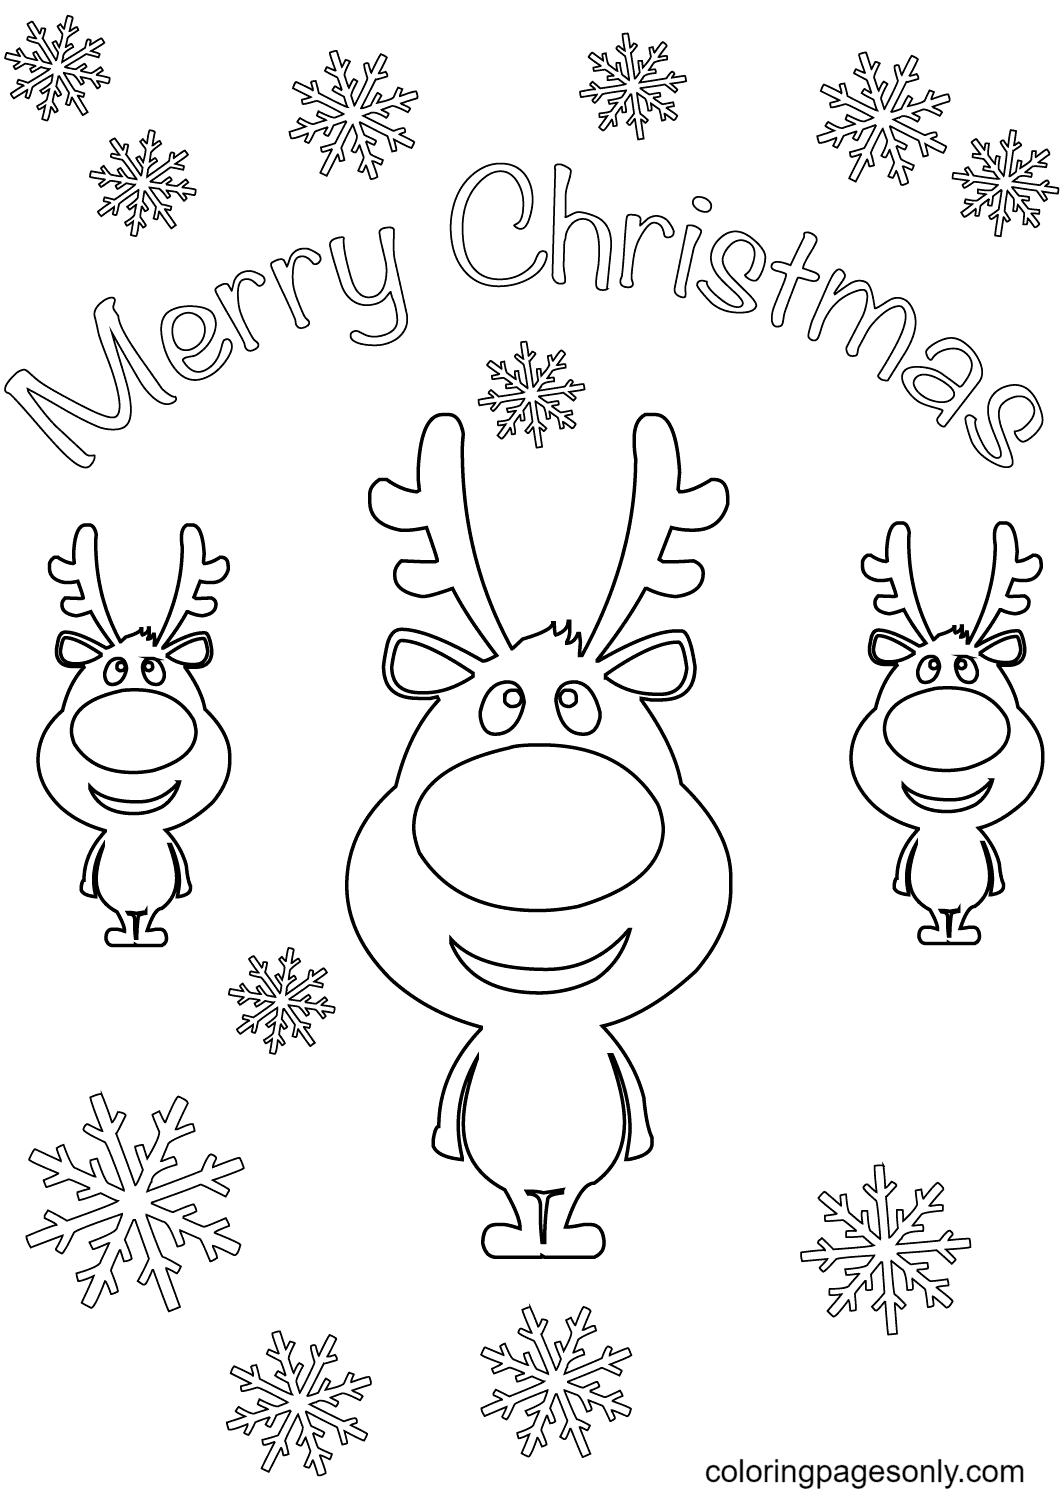 Merry Christmas Card with Cartoon Reindeers